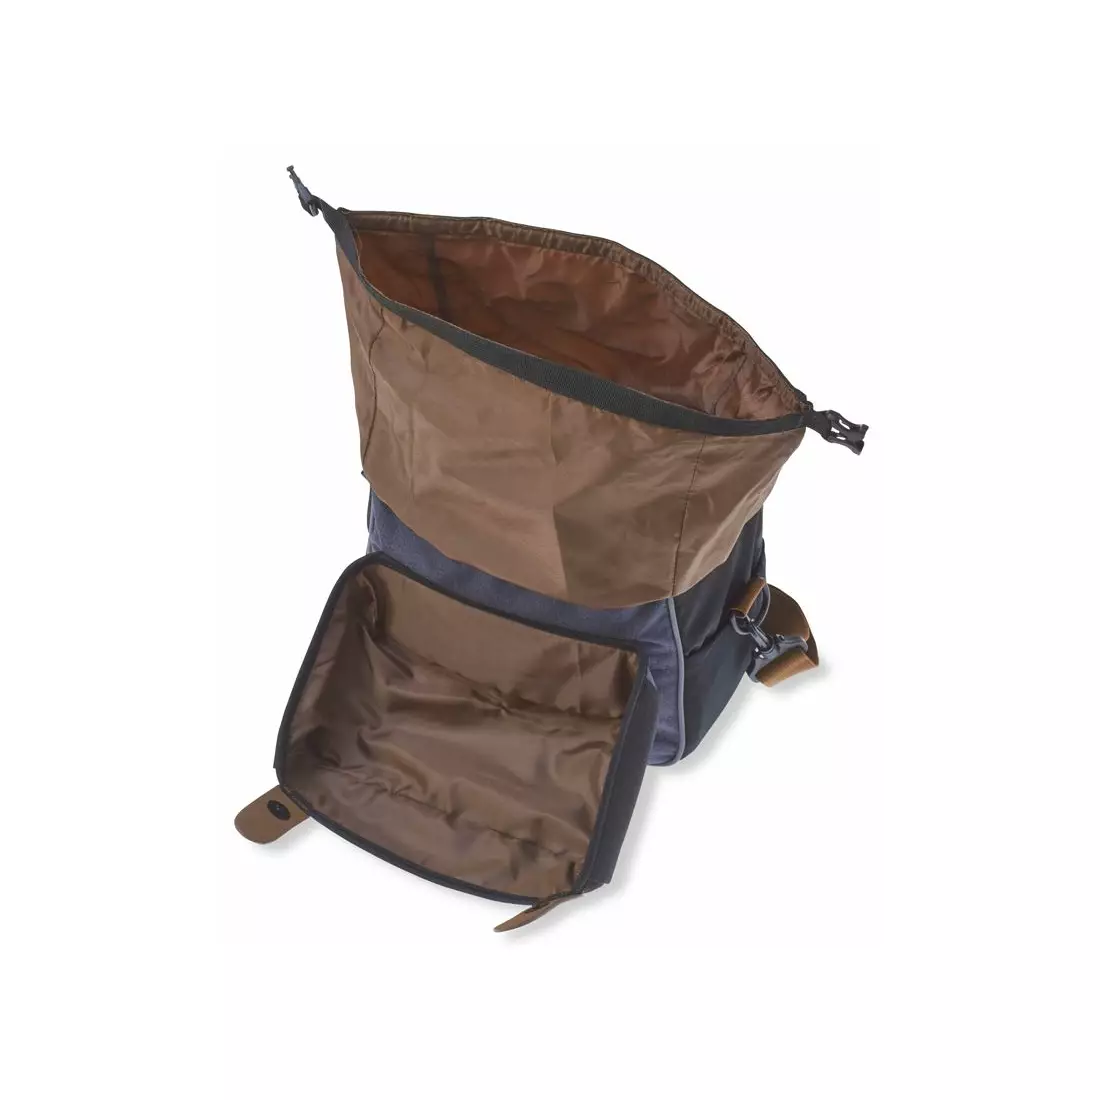 BASIL MILES HANDLEBAR BAG KF 6L Waterproof handlebar bag, dark blue BAS-17671